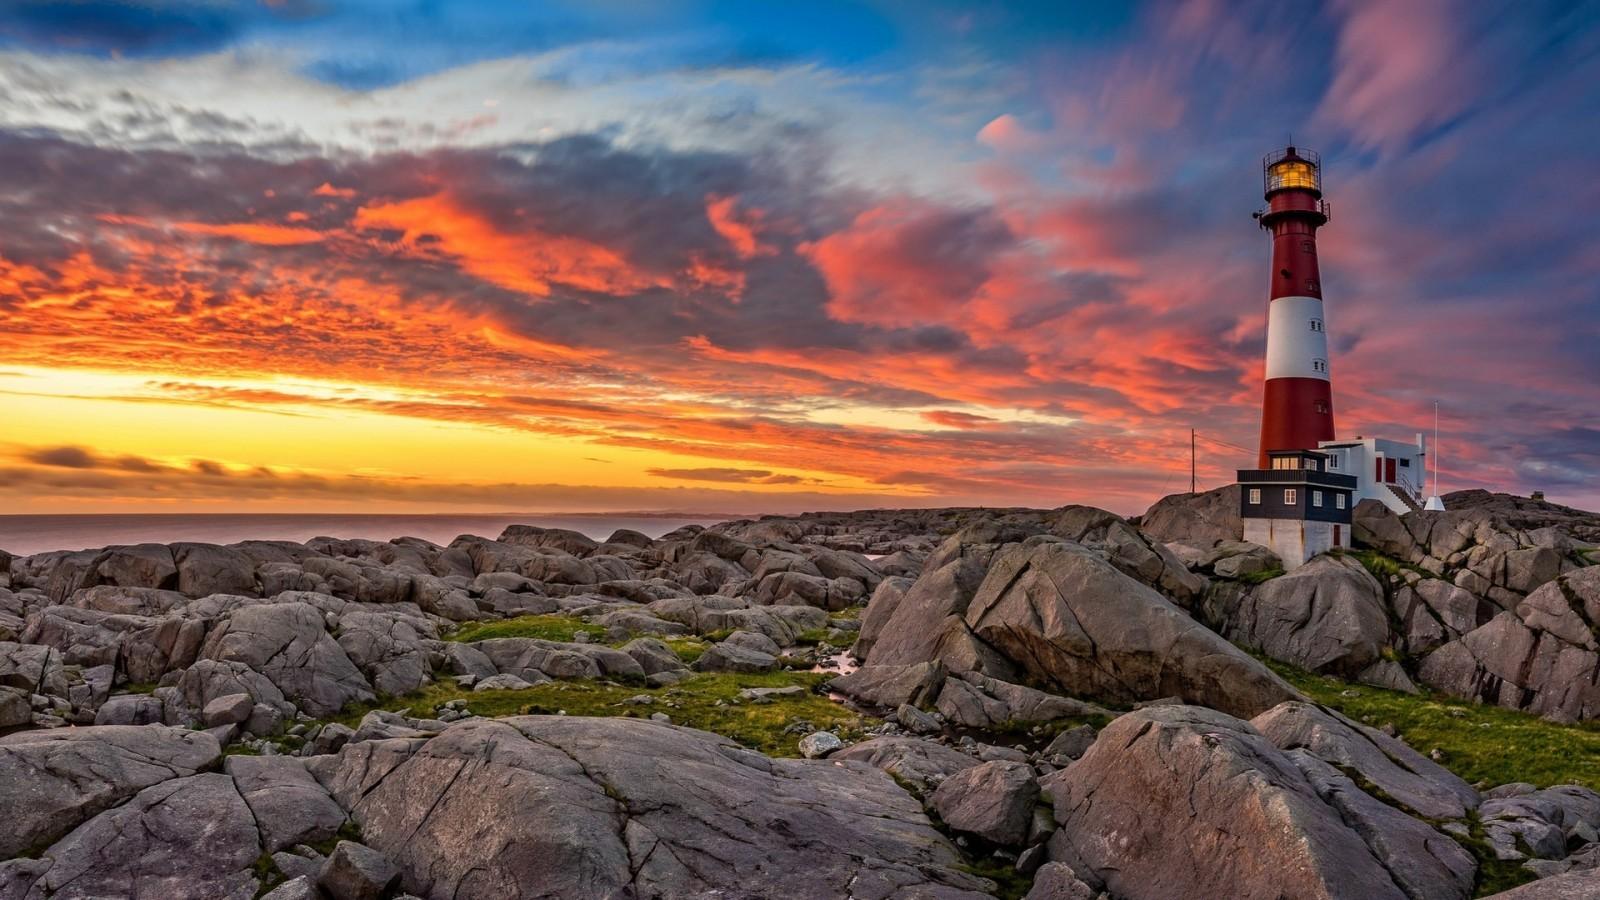 Download 1600x900 Lighthouse, Sunset, Rocks, Clouds Wallpaper